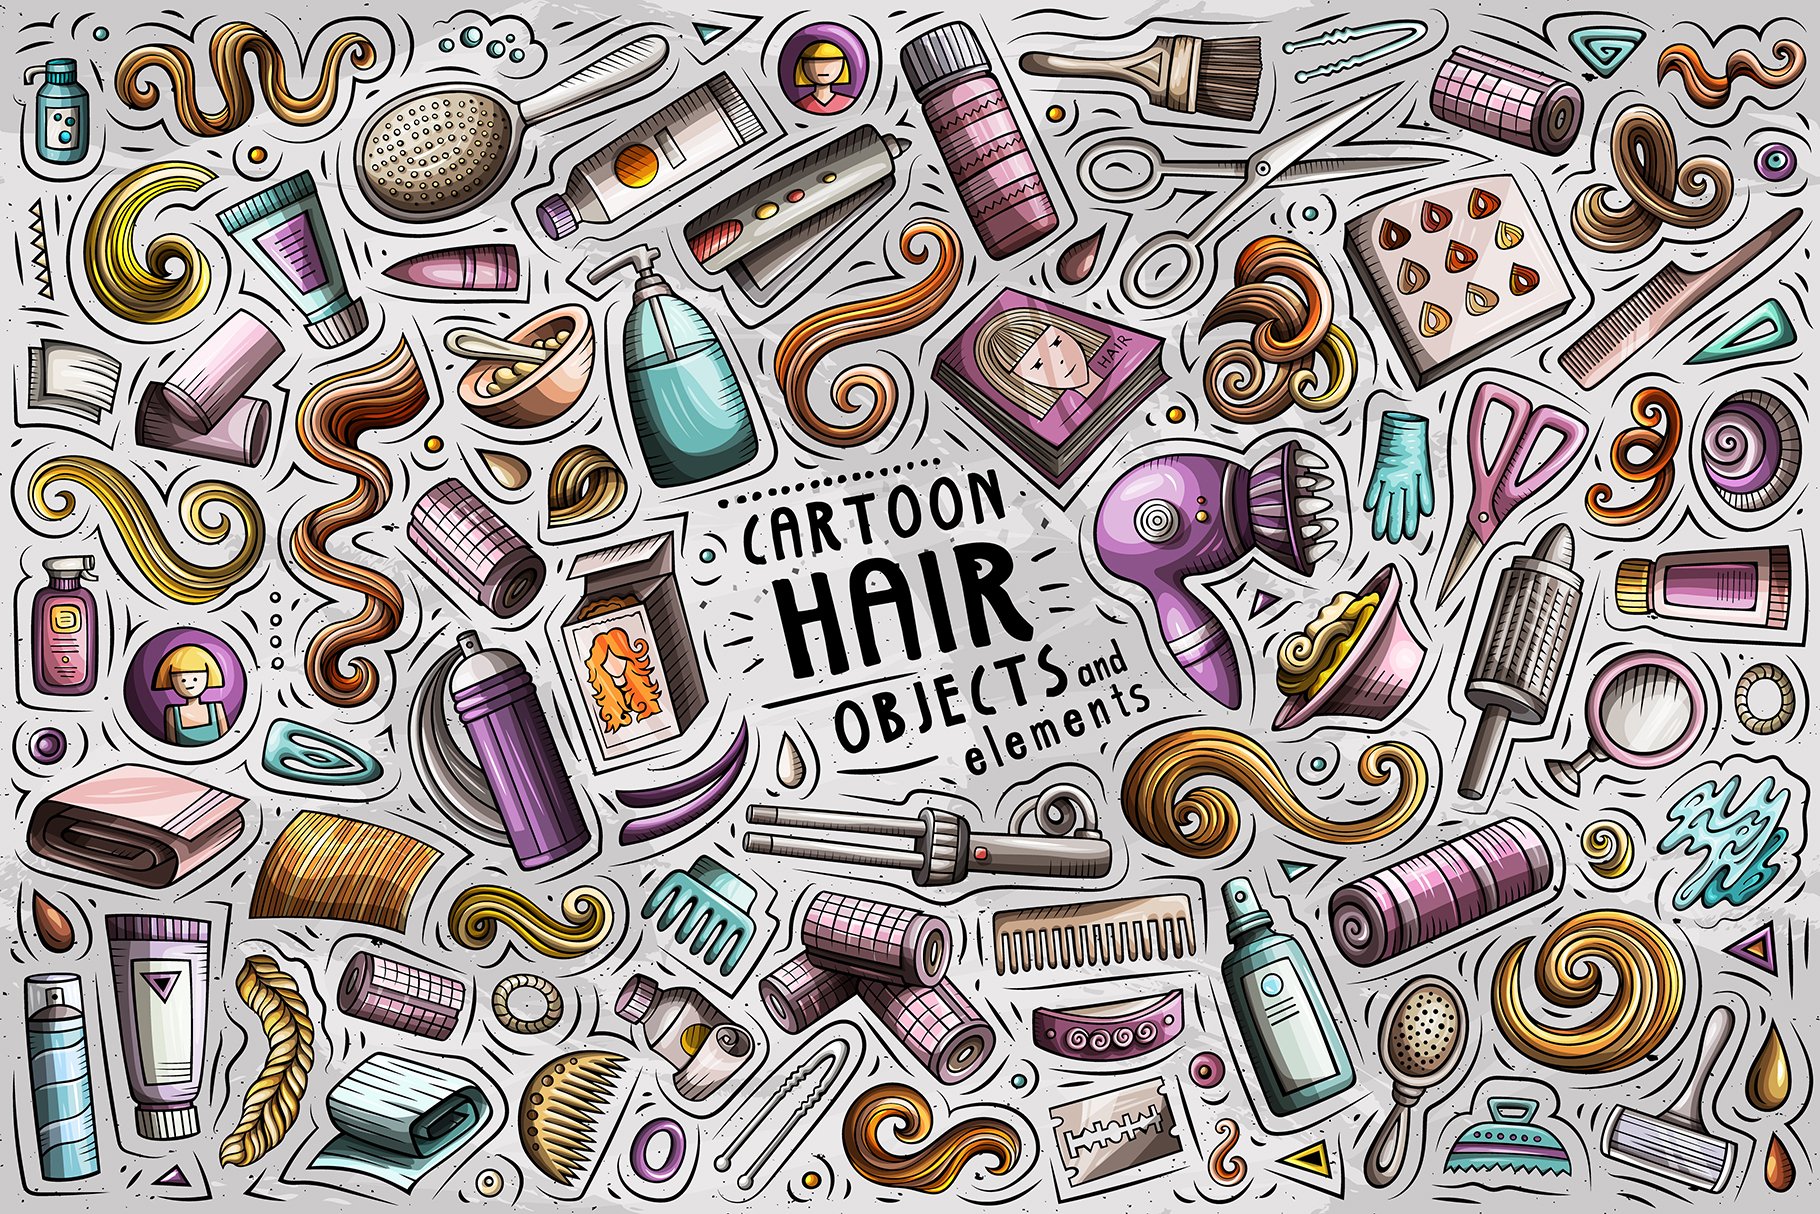 Hair Salon Cartoon Objects Set cover image.